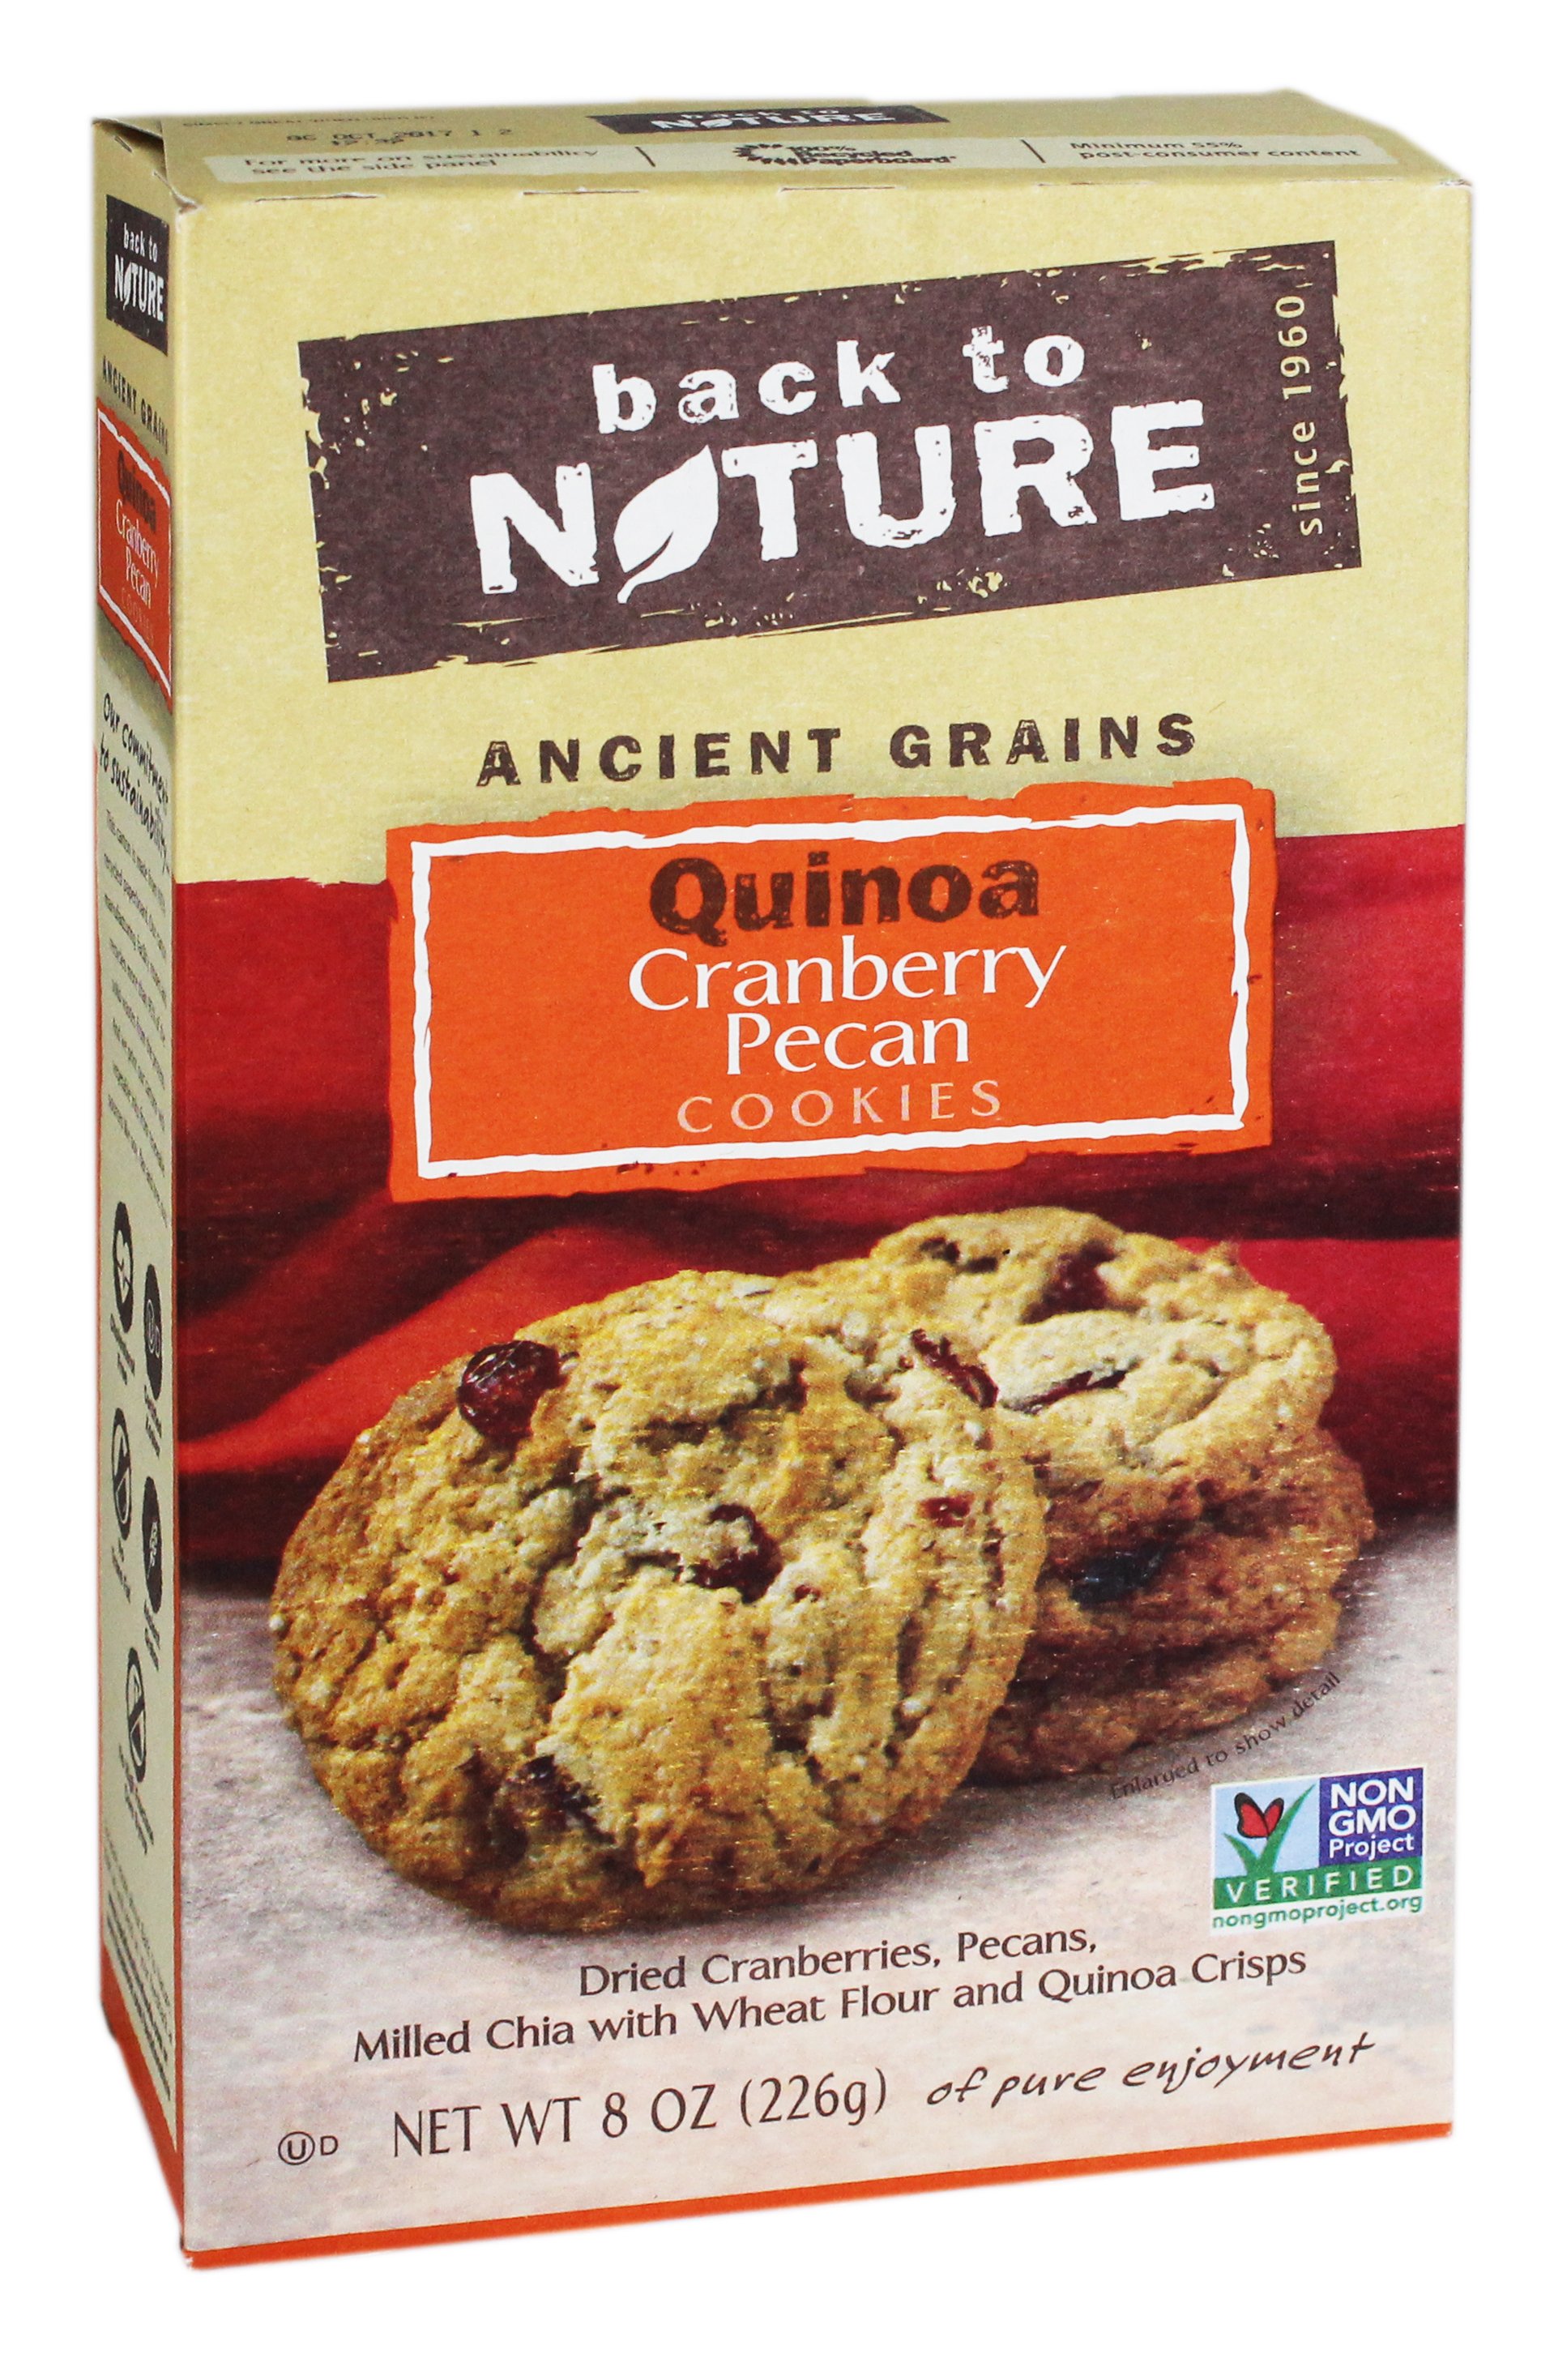 Back to Nature Quinoa Cranberry Pecan Cookies - Shop Cookies at H-E-B